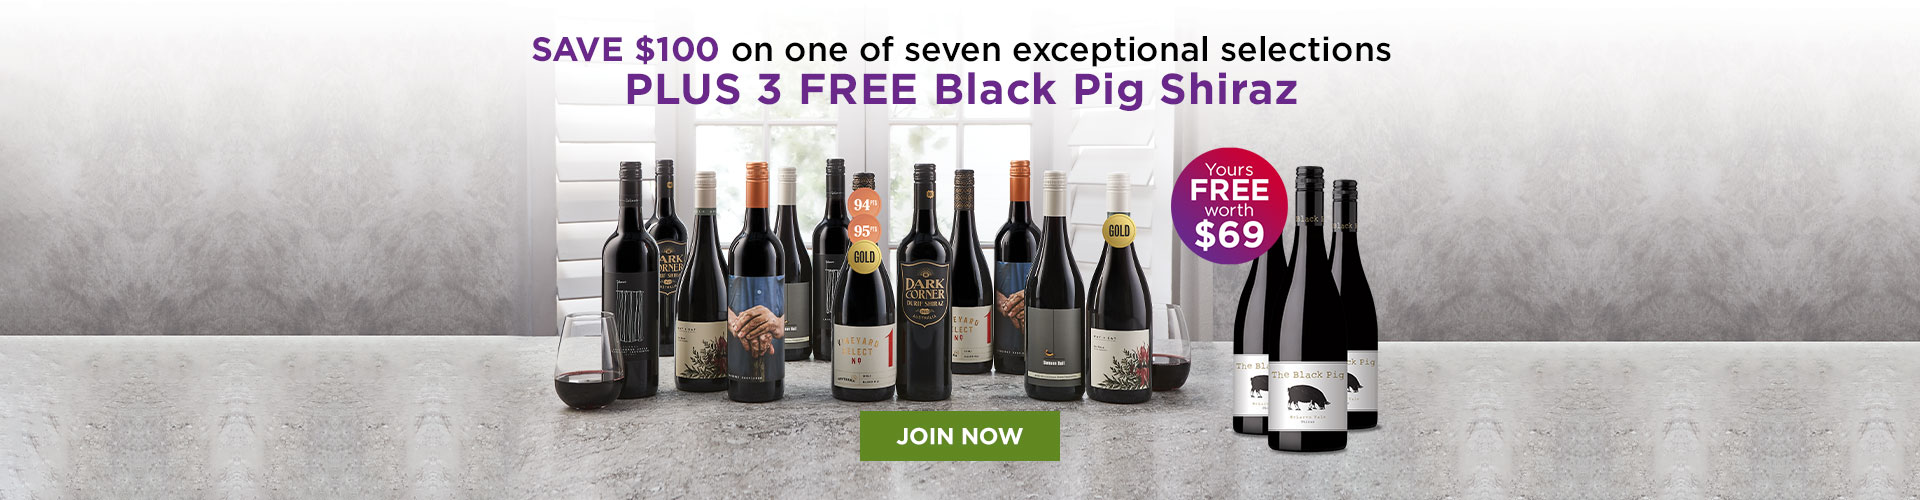 3 FREE Black Pig Shiraz - Save $100